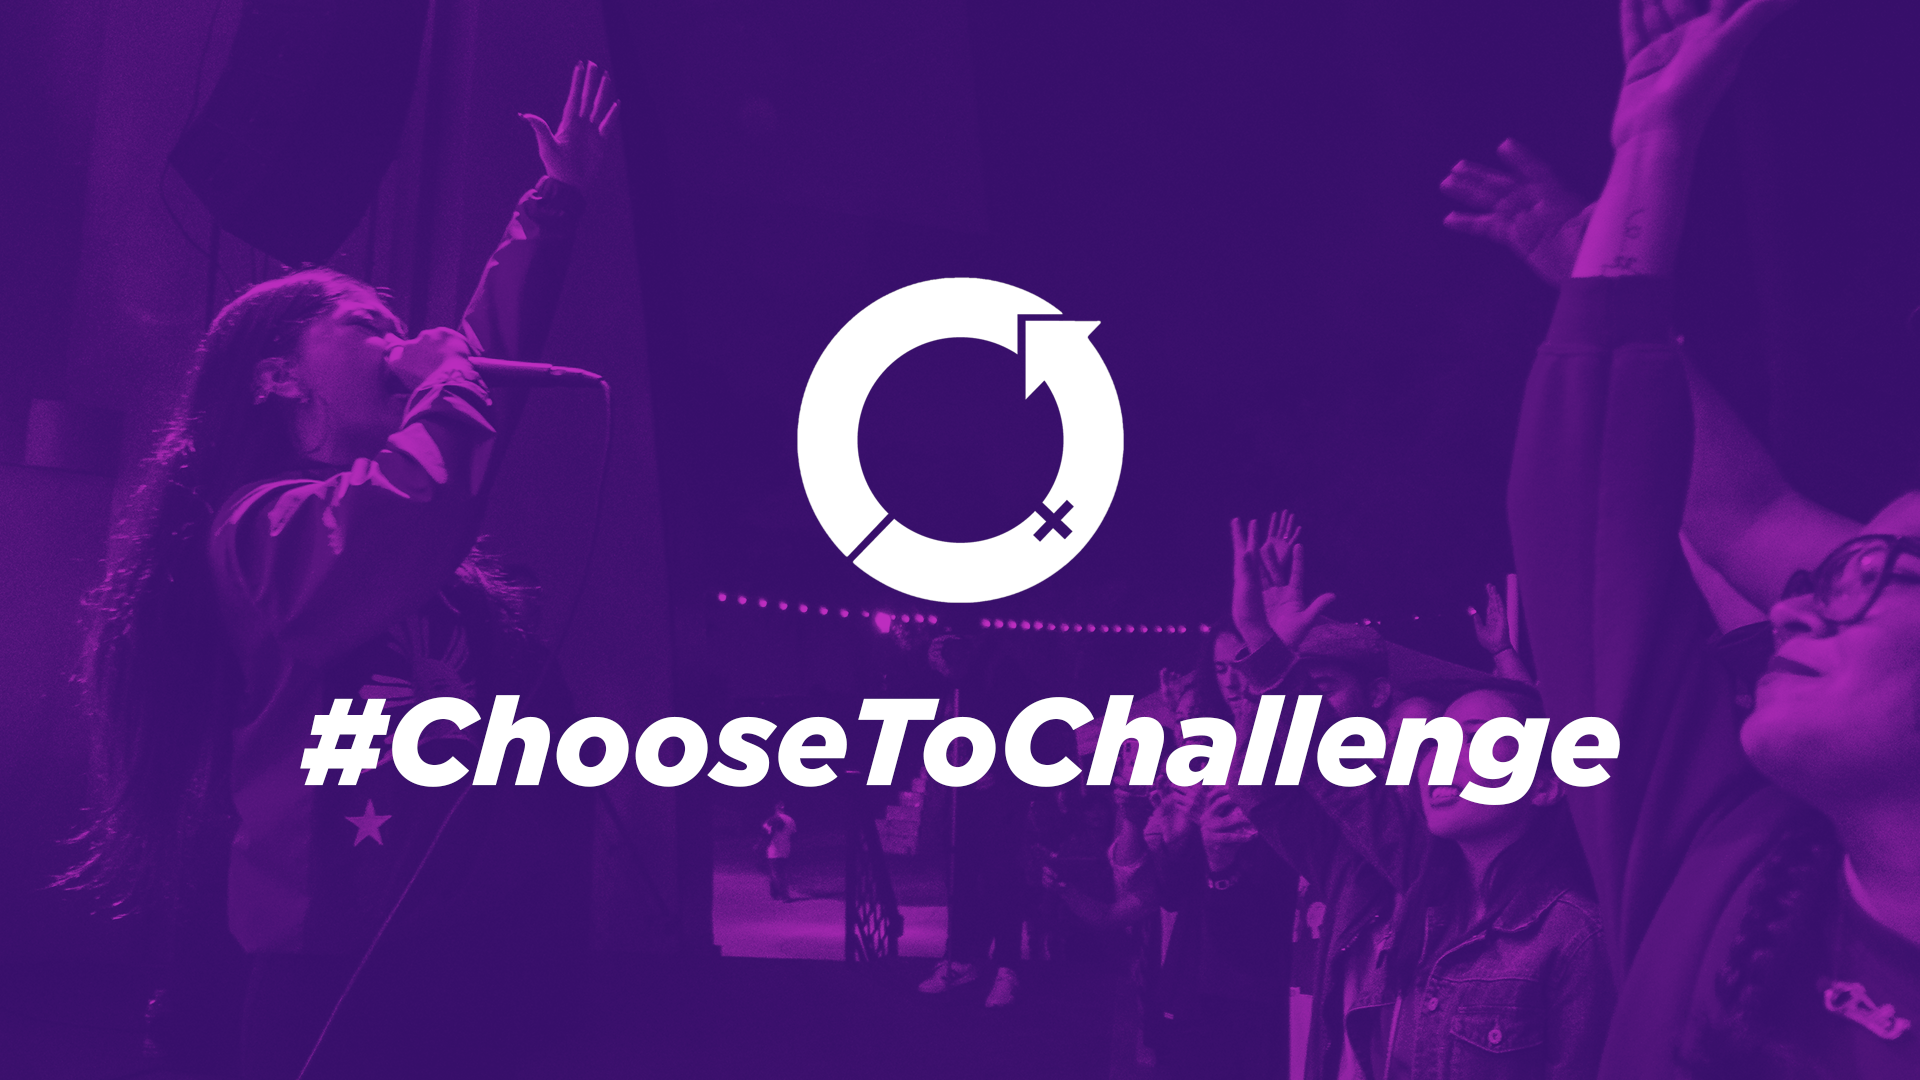 ChooseToChallenge: Ways Gender Inequality in the Music Industry - reVerb